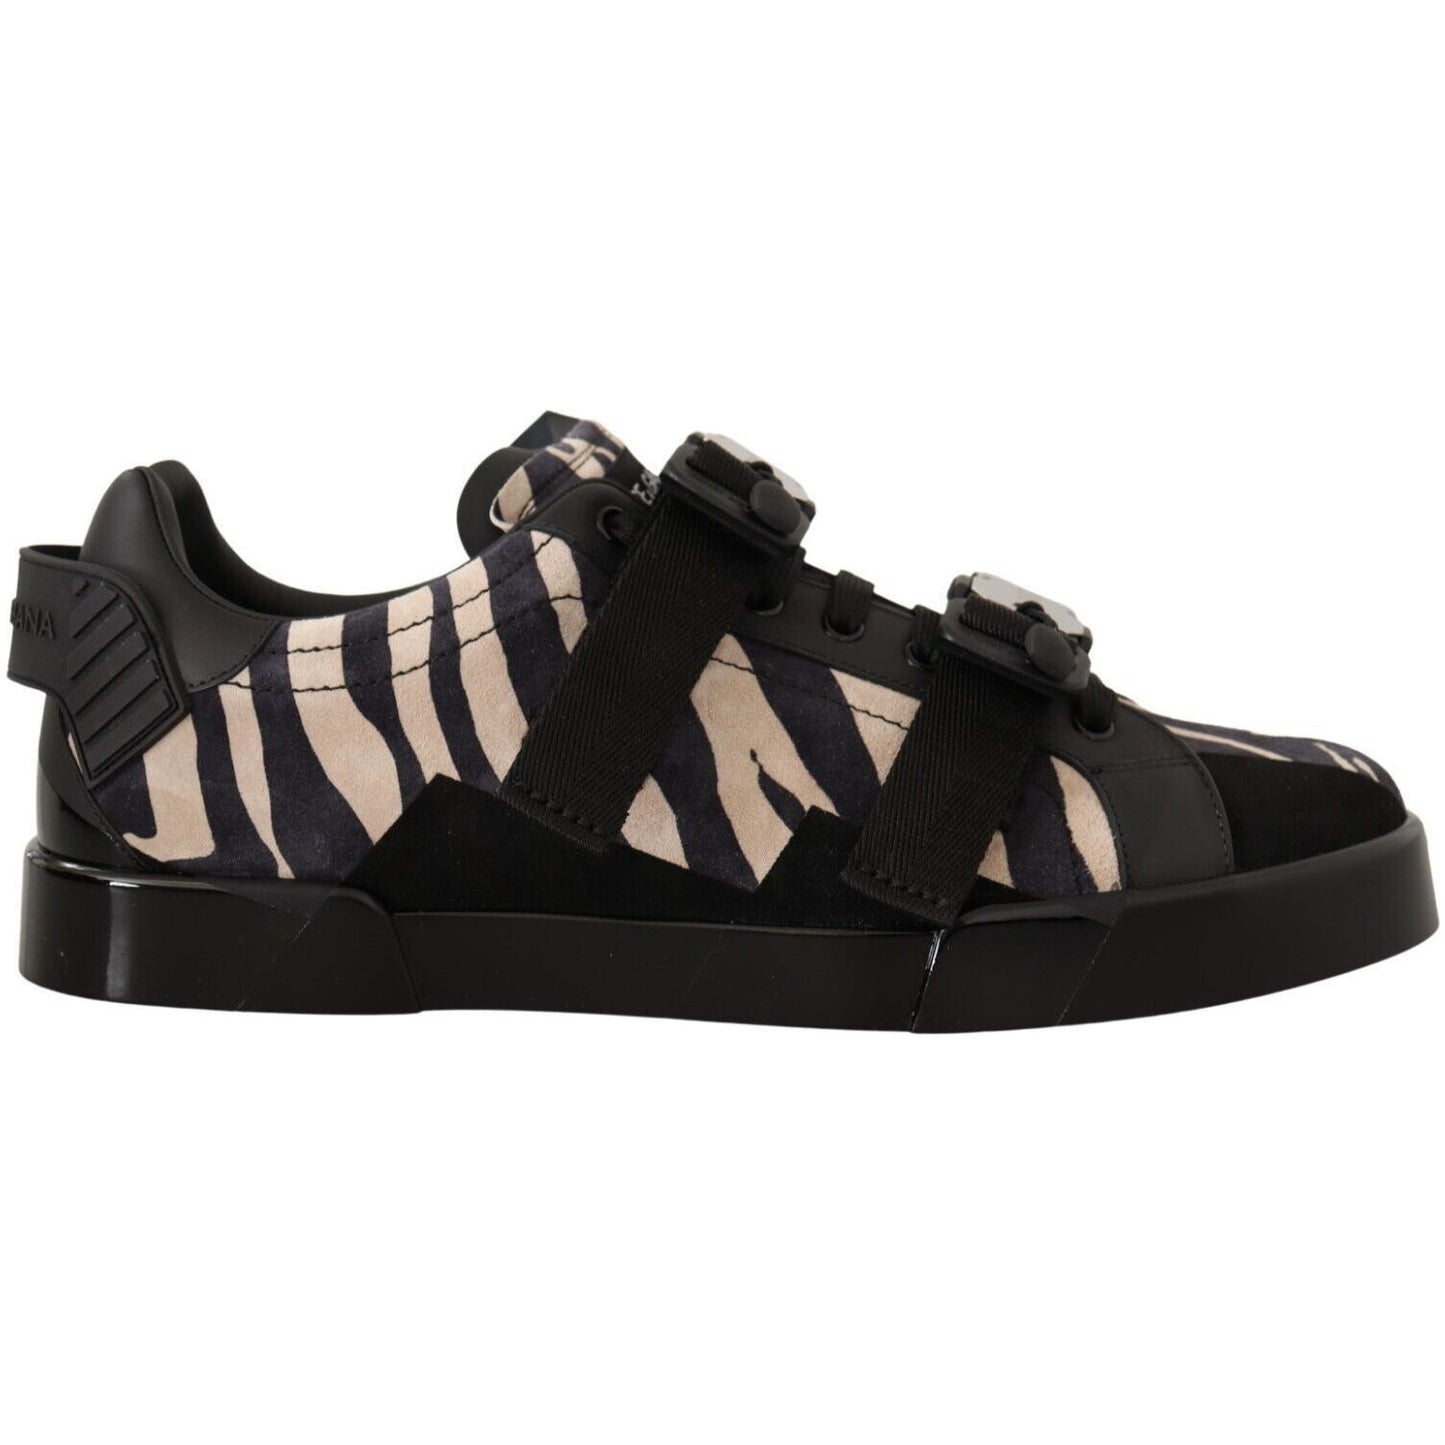 Dolce & Gabbana Zebra Suede Low Top Fashion Sneakers black-white-zebra-suede-rubber-sneakers-shoes-2 MAN SNEAKERS s-l1600-72-8a5eb165-ccf.jpg